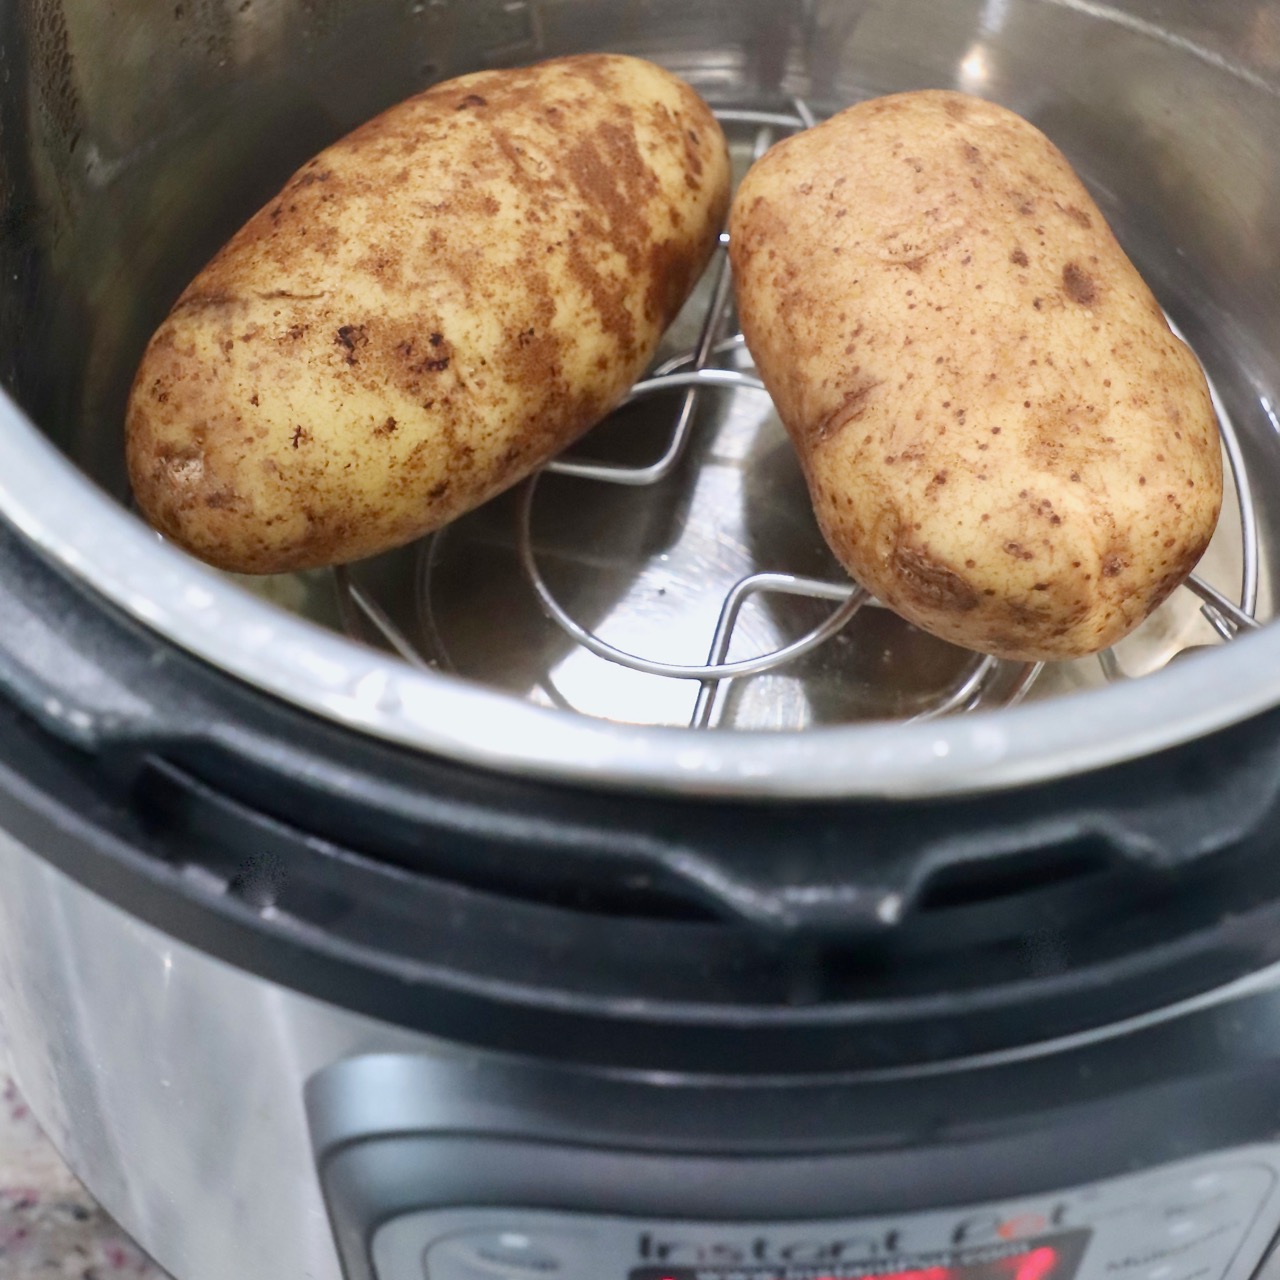 https://whitneybond.com/wp-content/uploads/2022/11/instant-pot-baked-potatoes-7.jpg